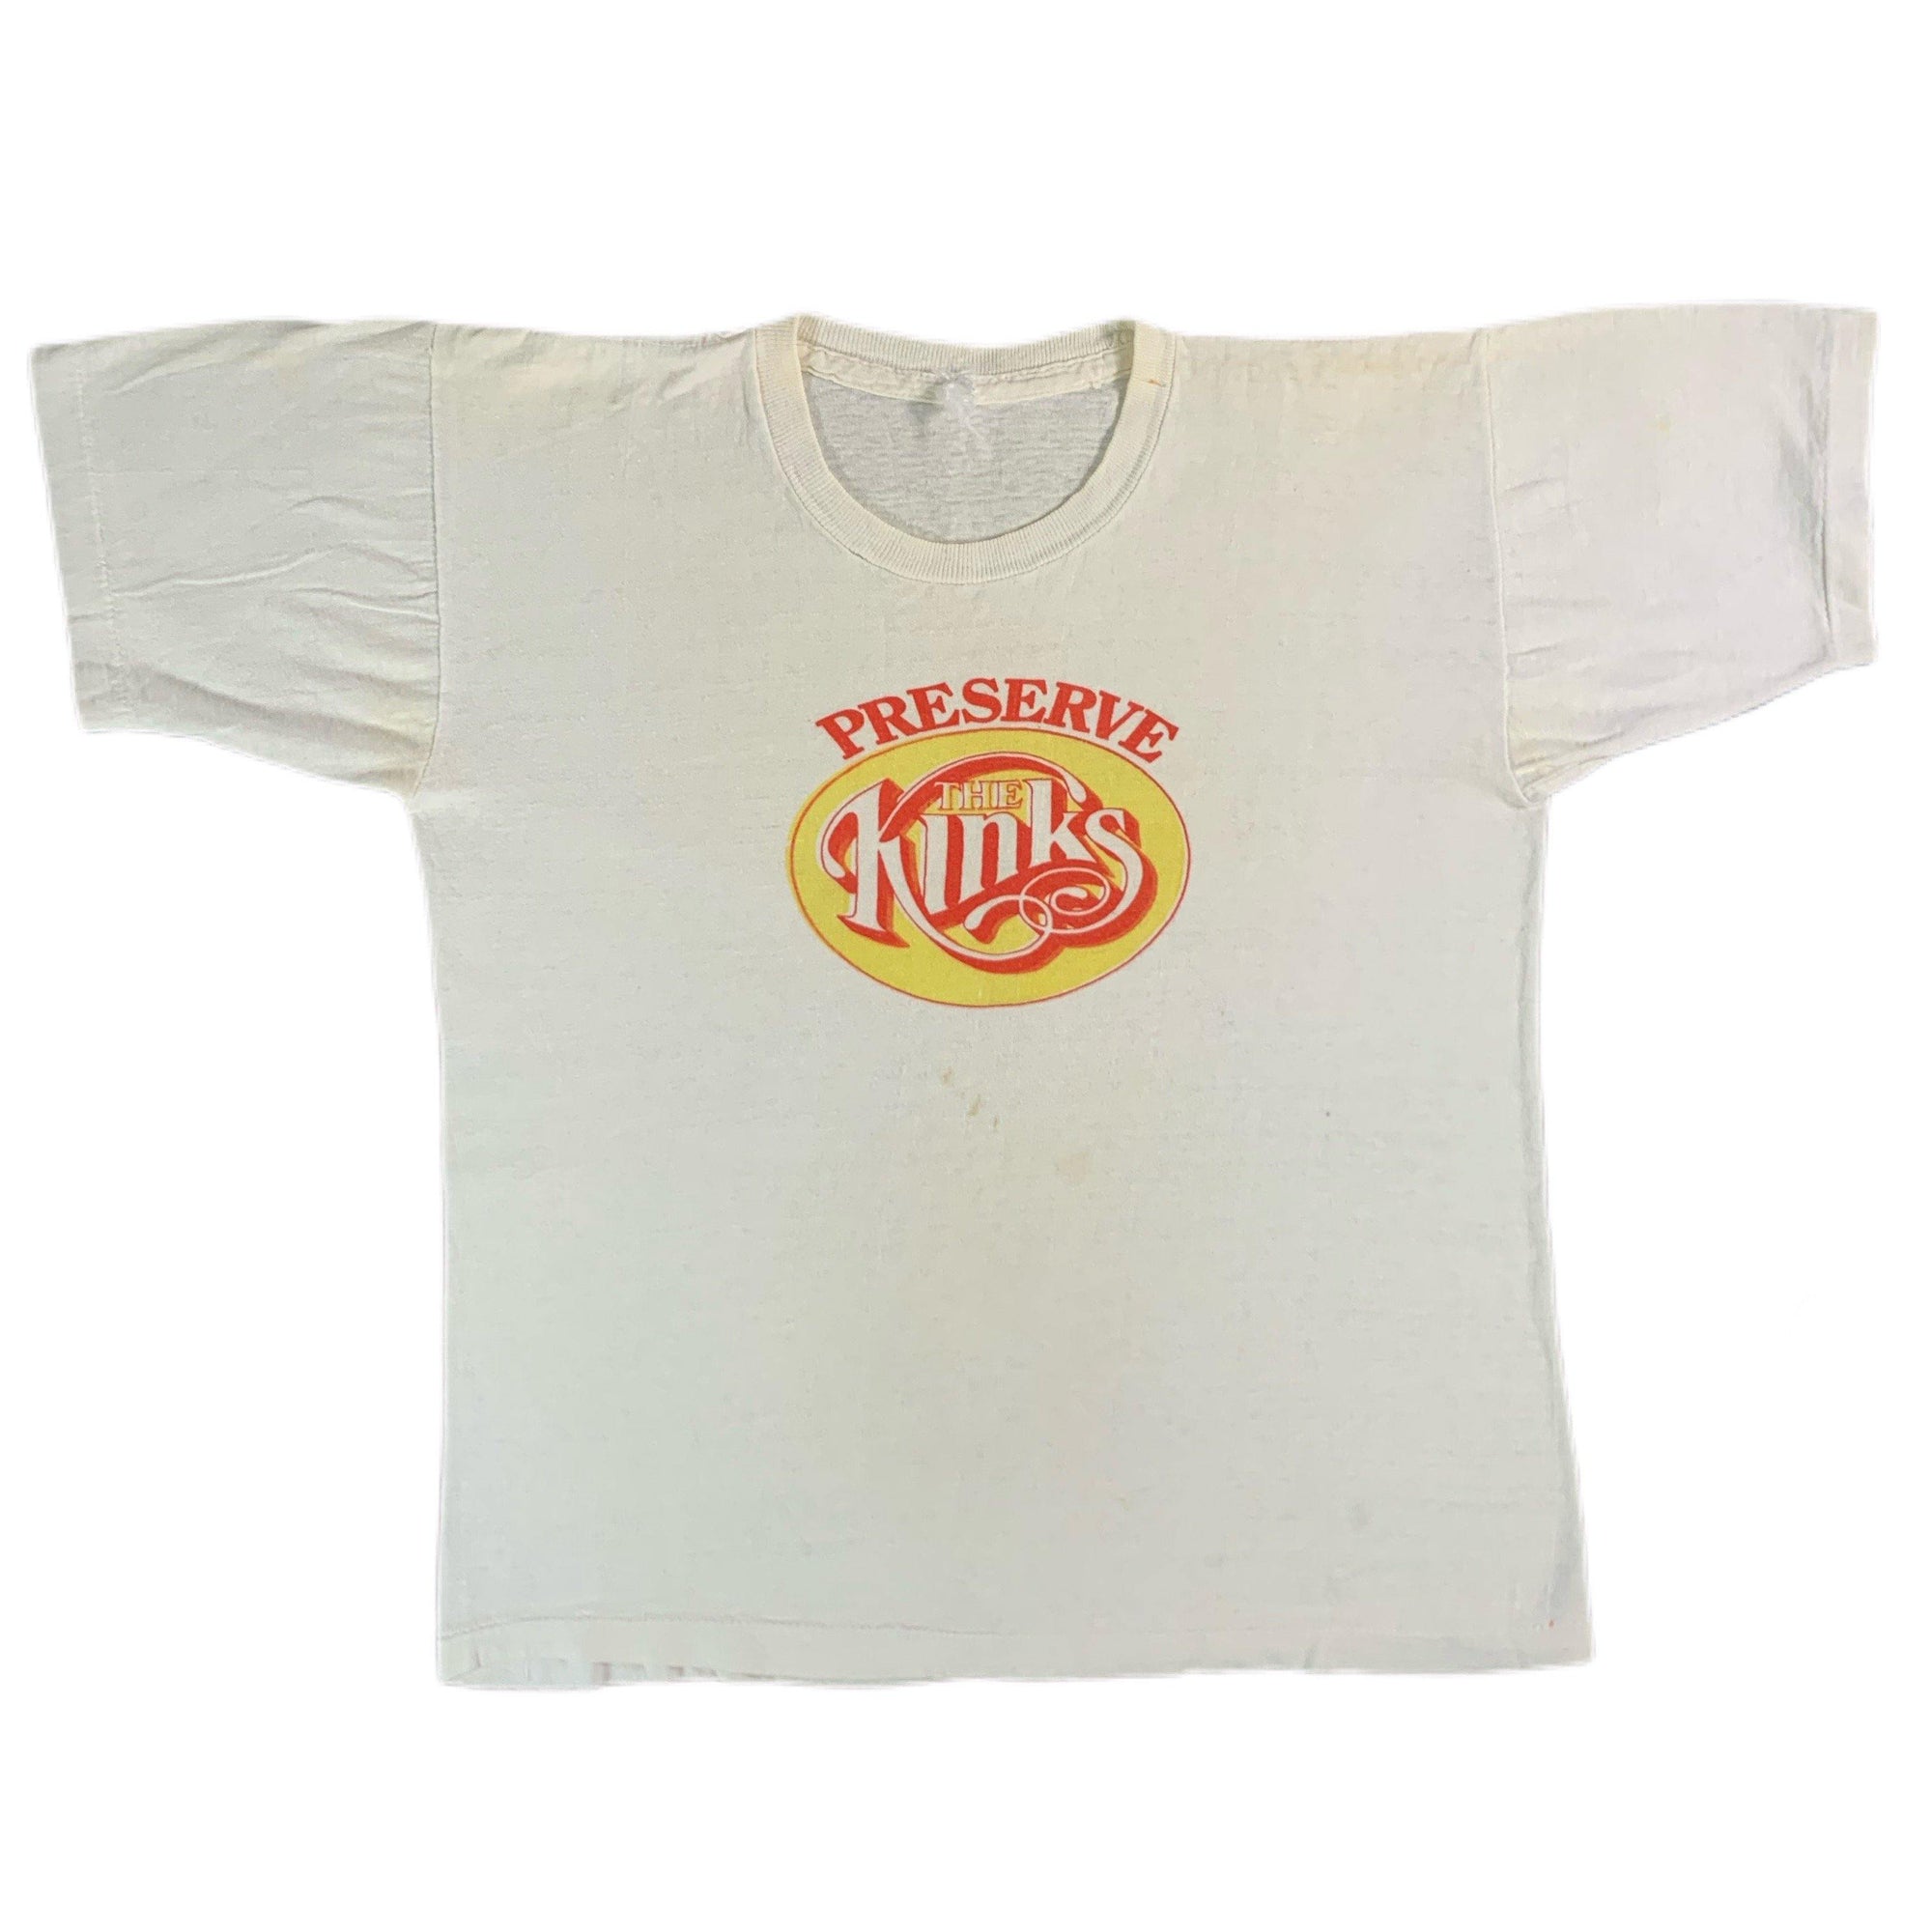 Vintage The Kinks "Preserve" T-Shirt - jointcustodydc